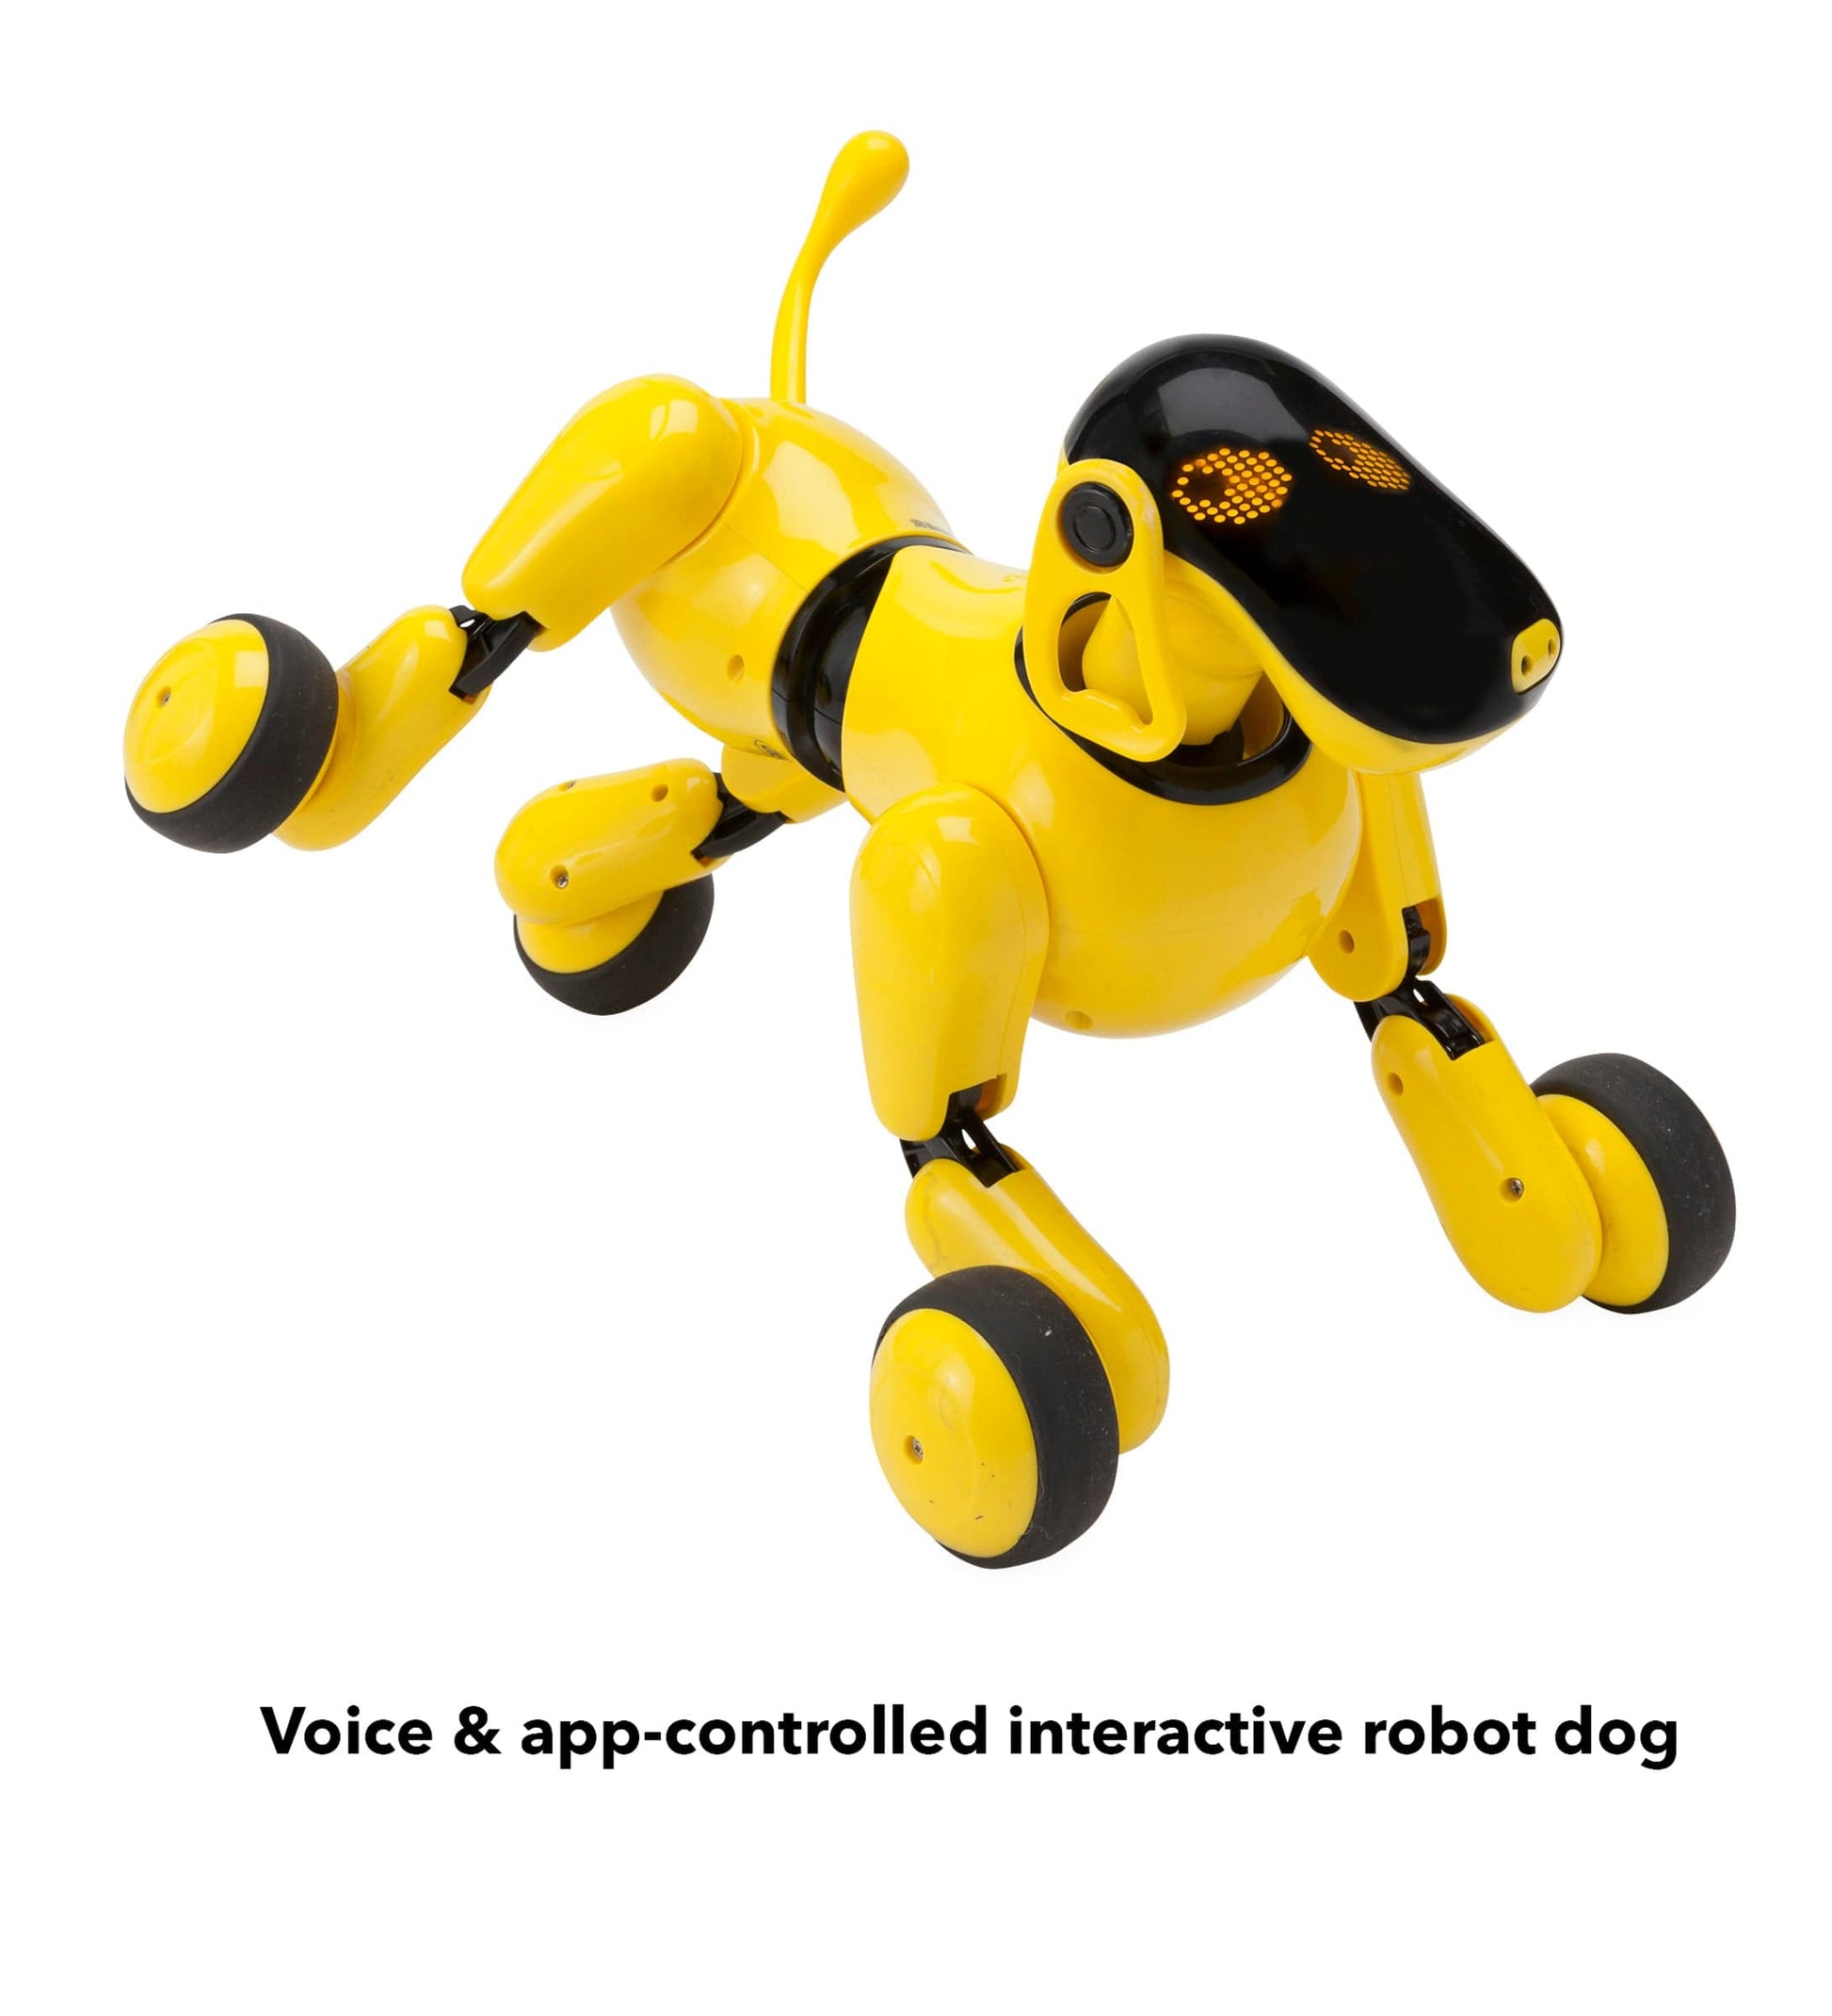 Dancing Dog Toys Electric Light Up Singing Cute Cartoon Doggy